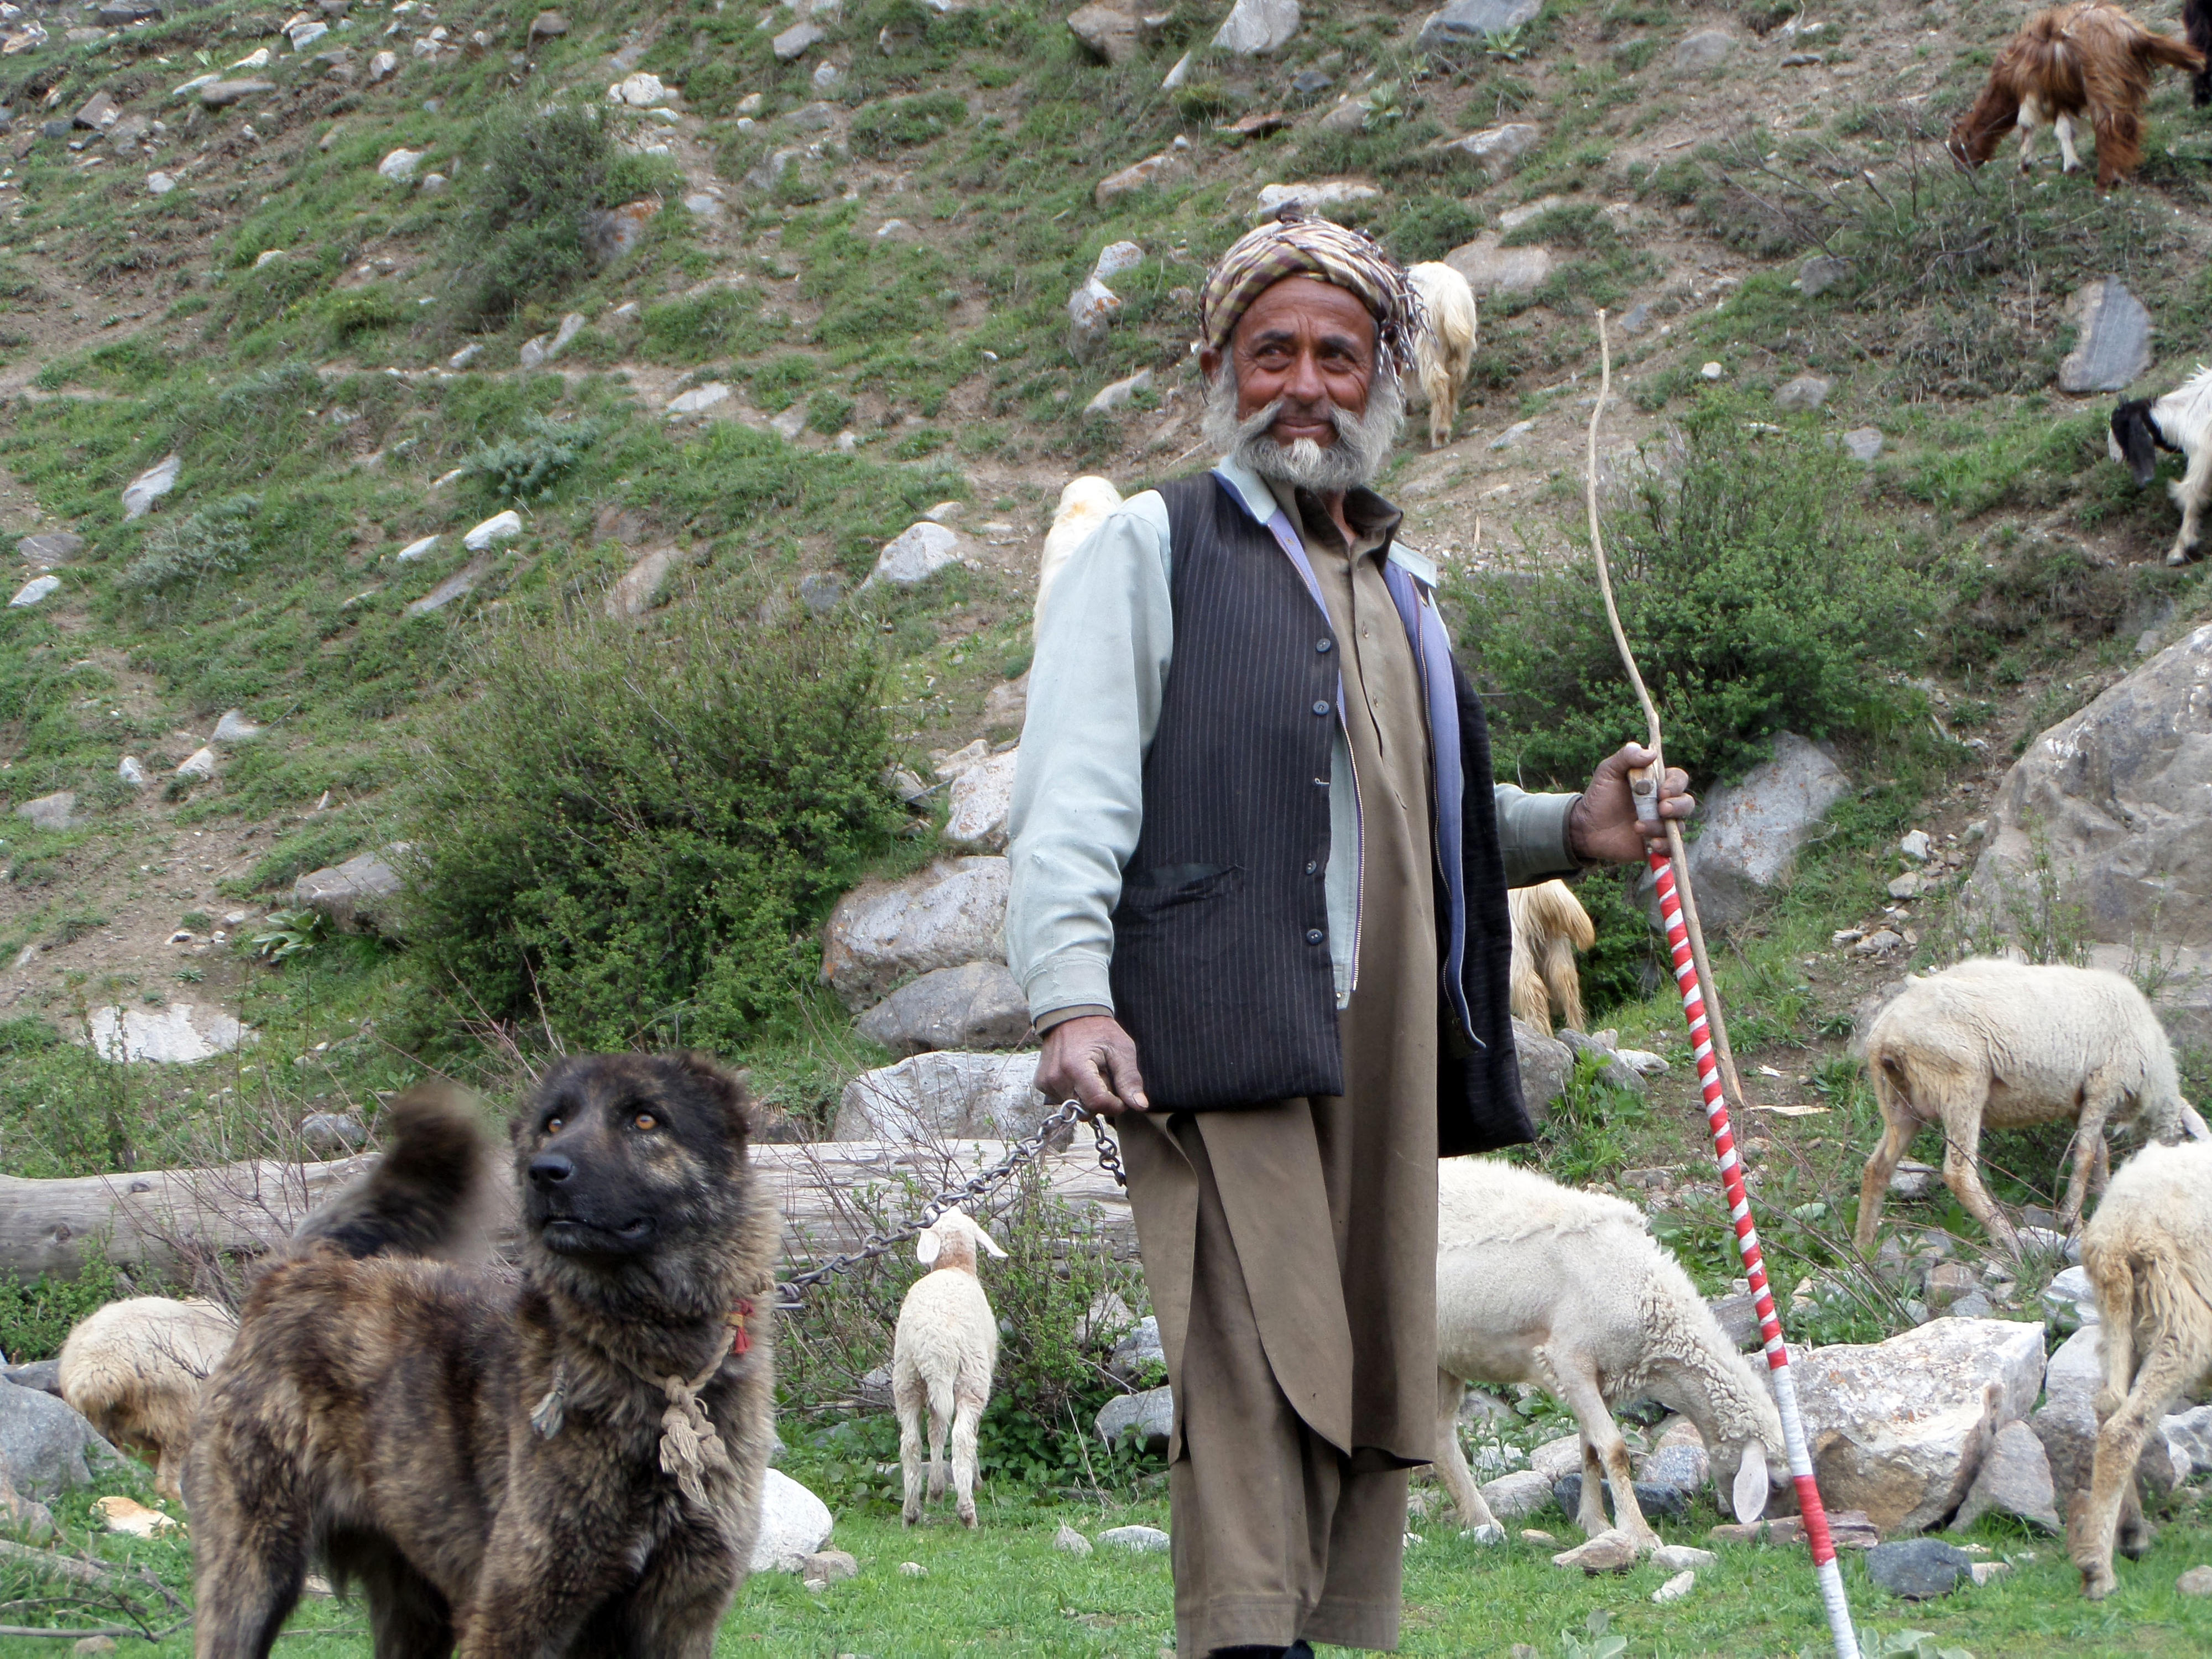 A shepherd in Naran Valley, Khyber Pakhtunkhwa province, Pakistan